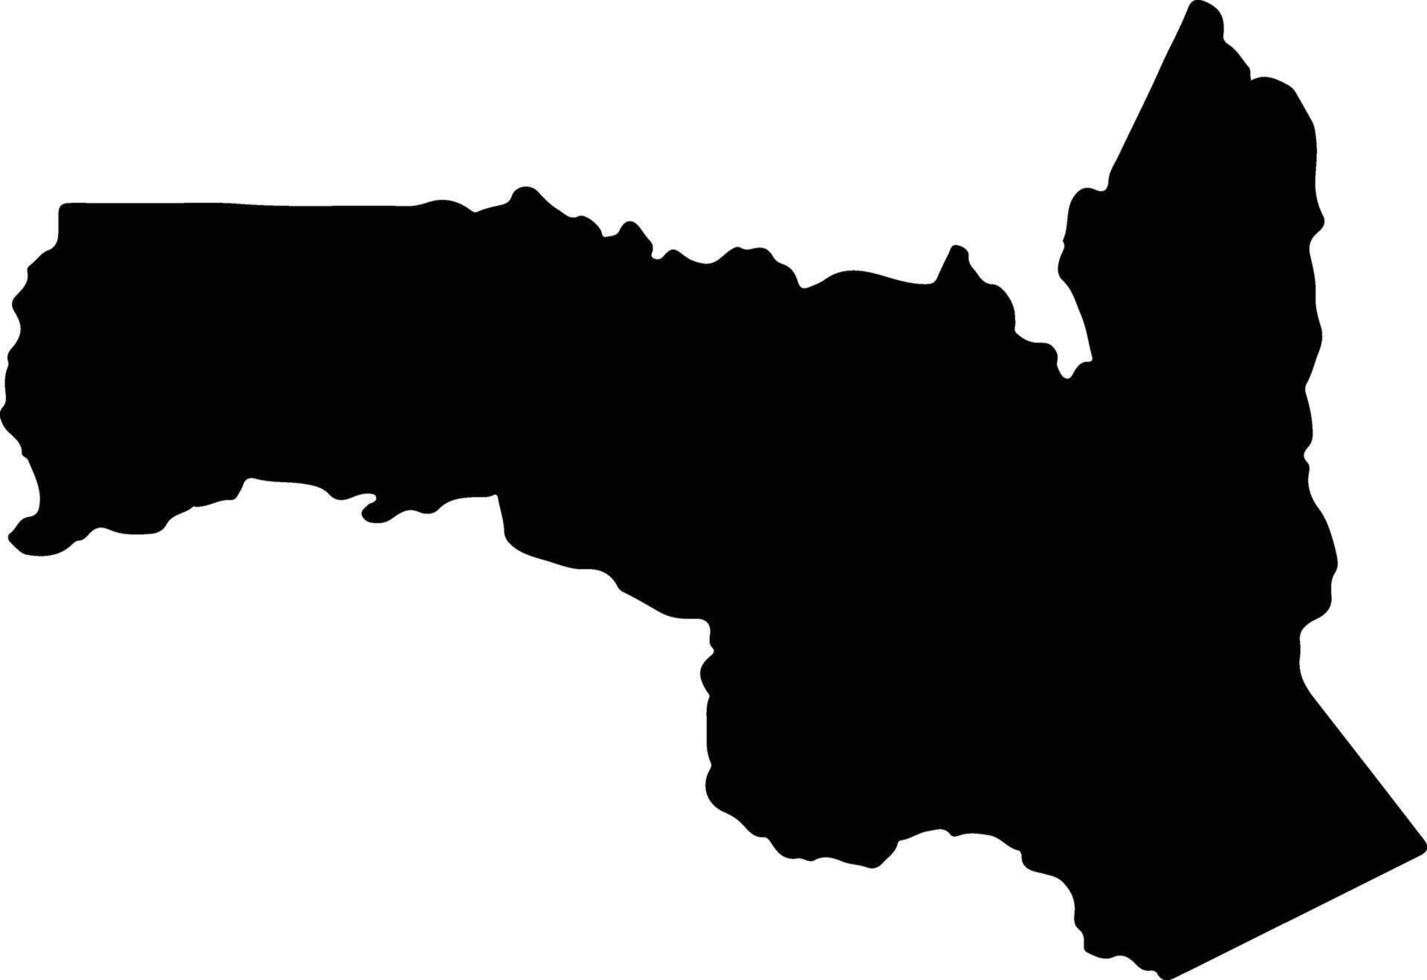 Sangha Republic of the Congo silhouette map vector